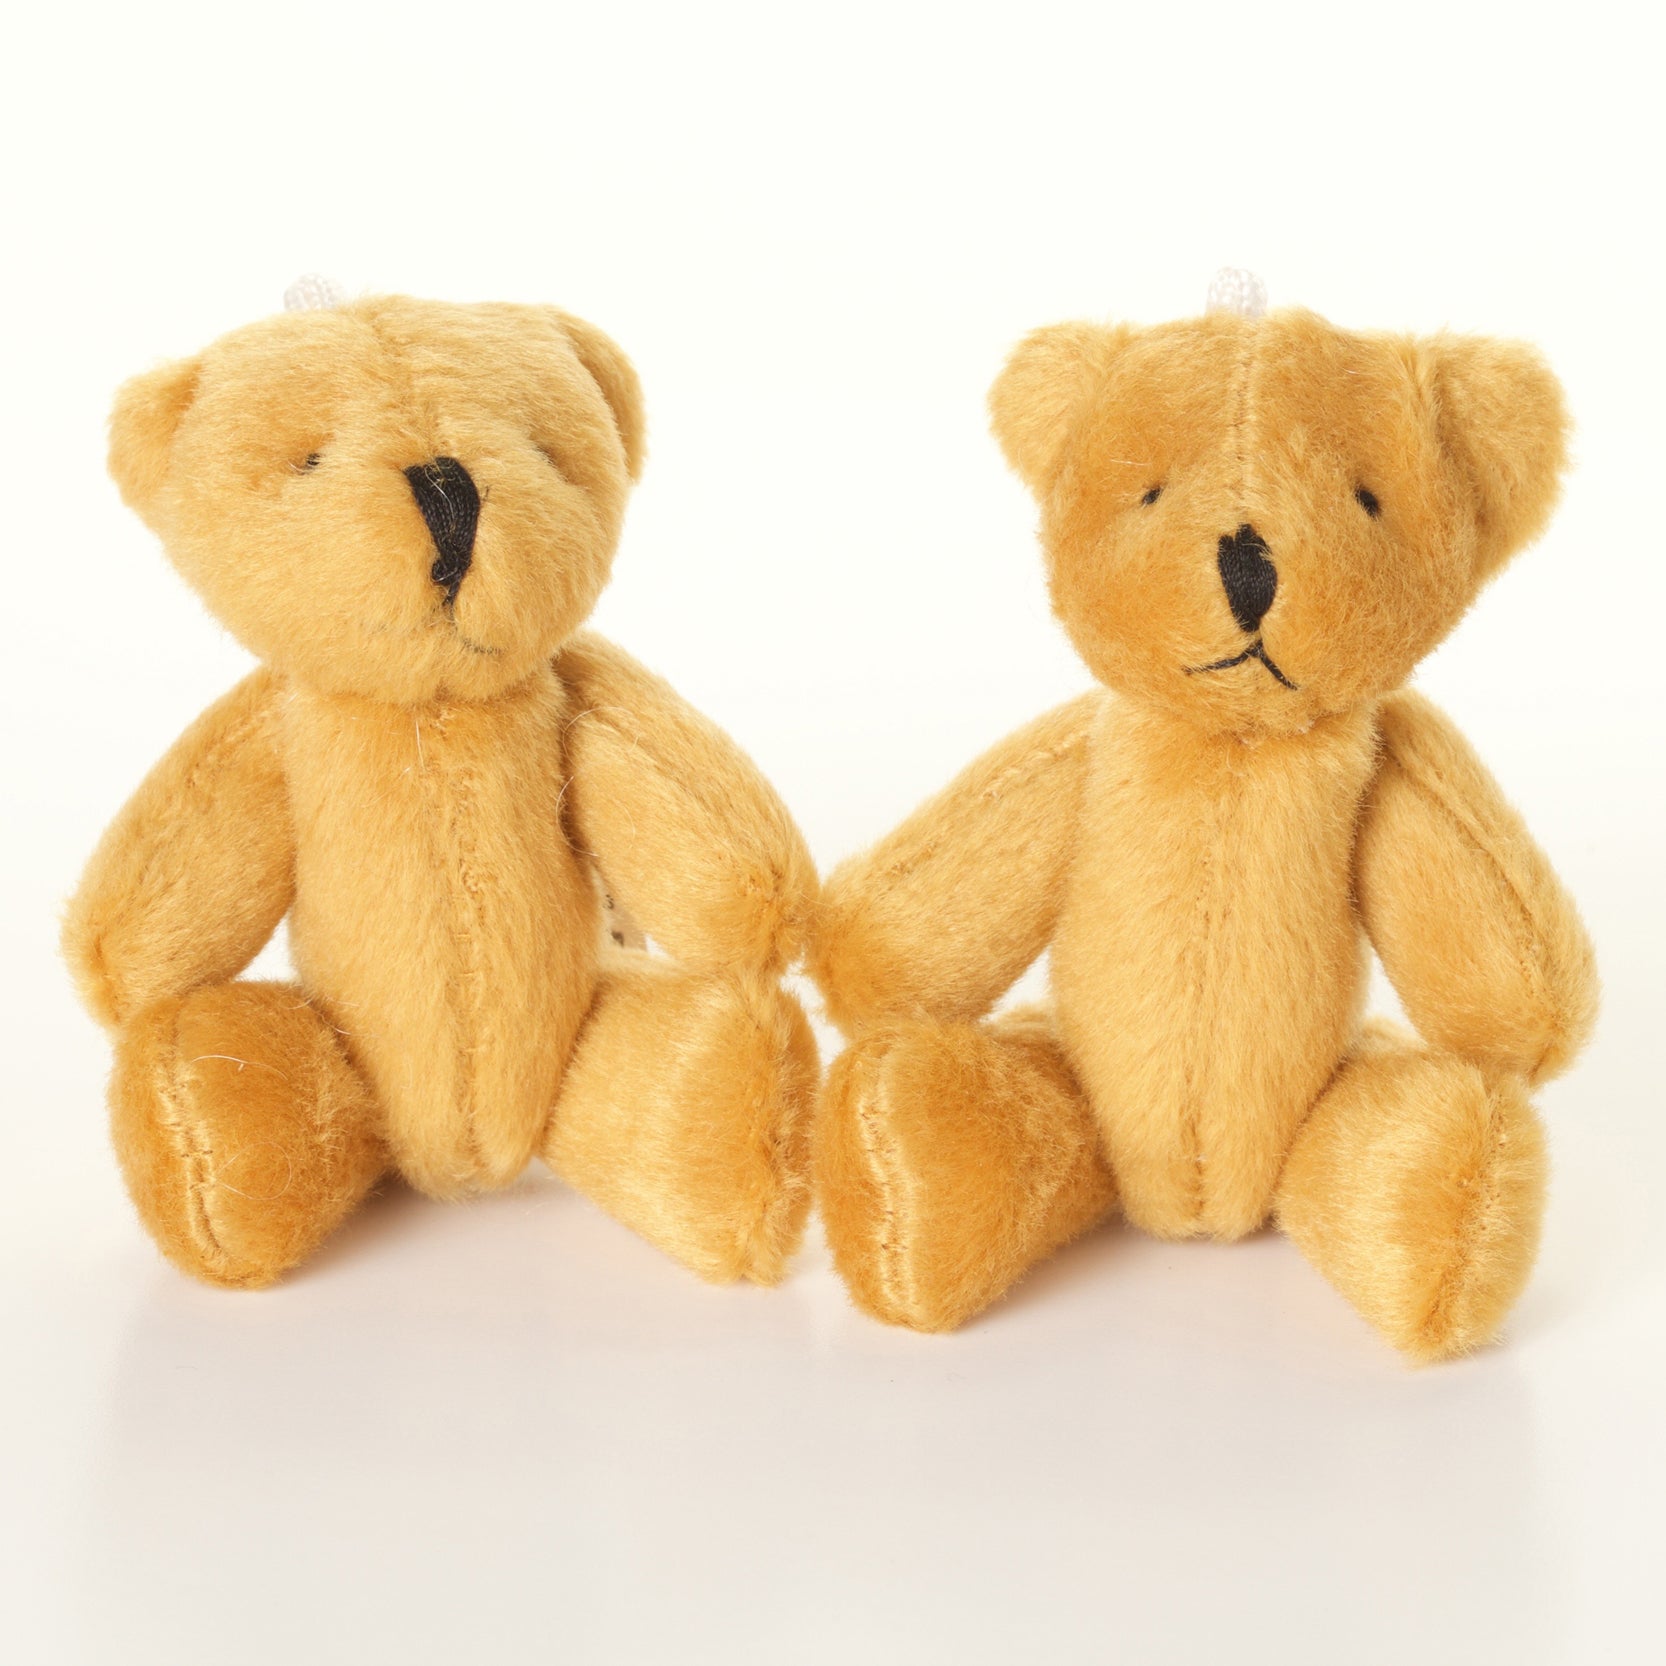 Small BROWN Teddy Bears X 50 - Cute Soft Adorable